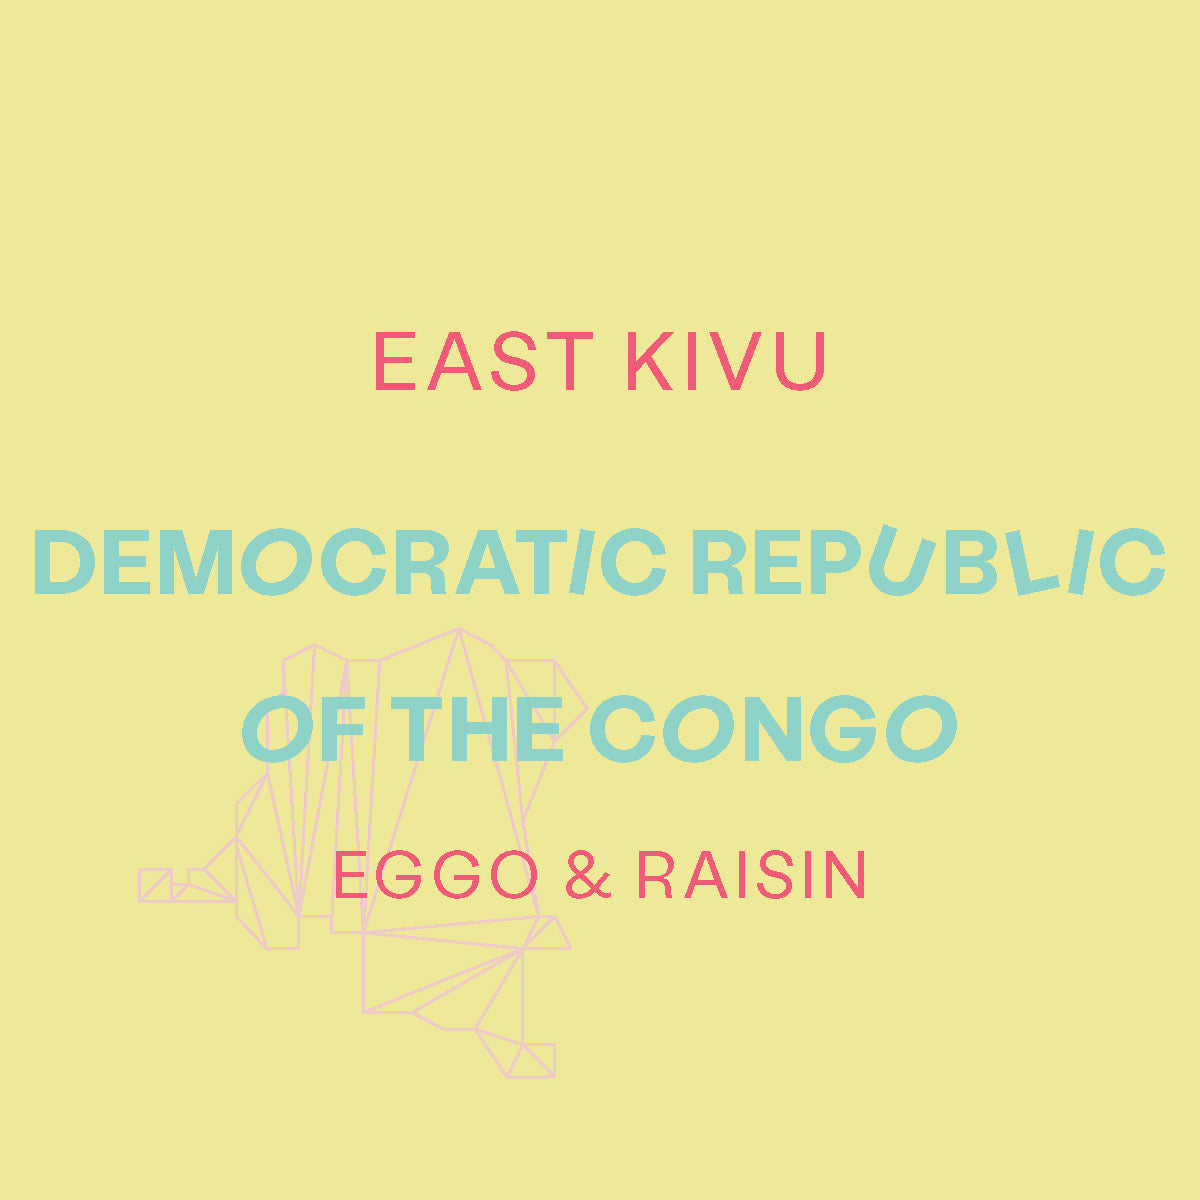 DRC, East Kivu